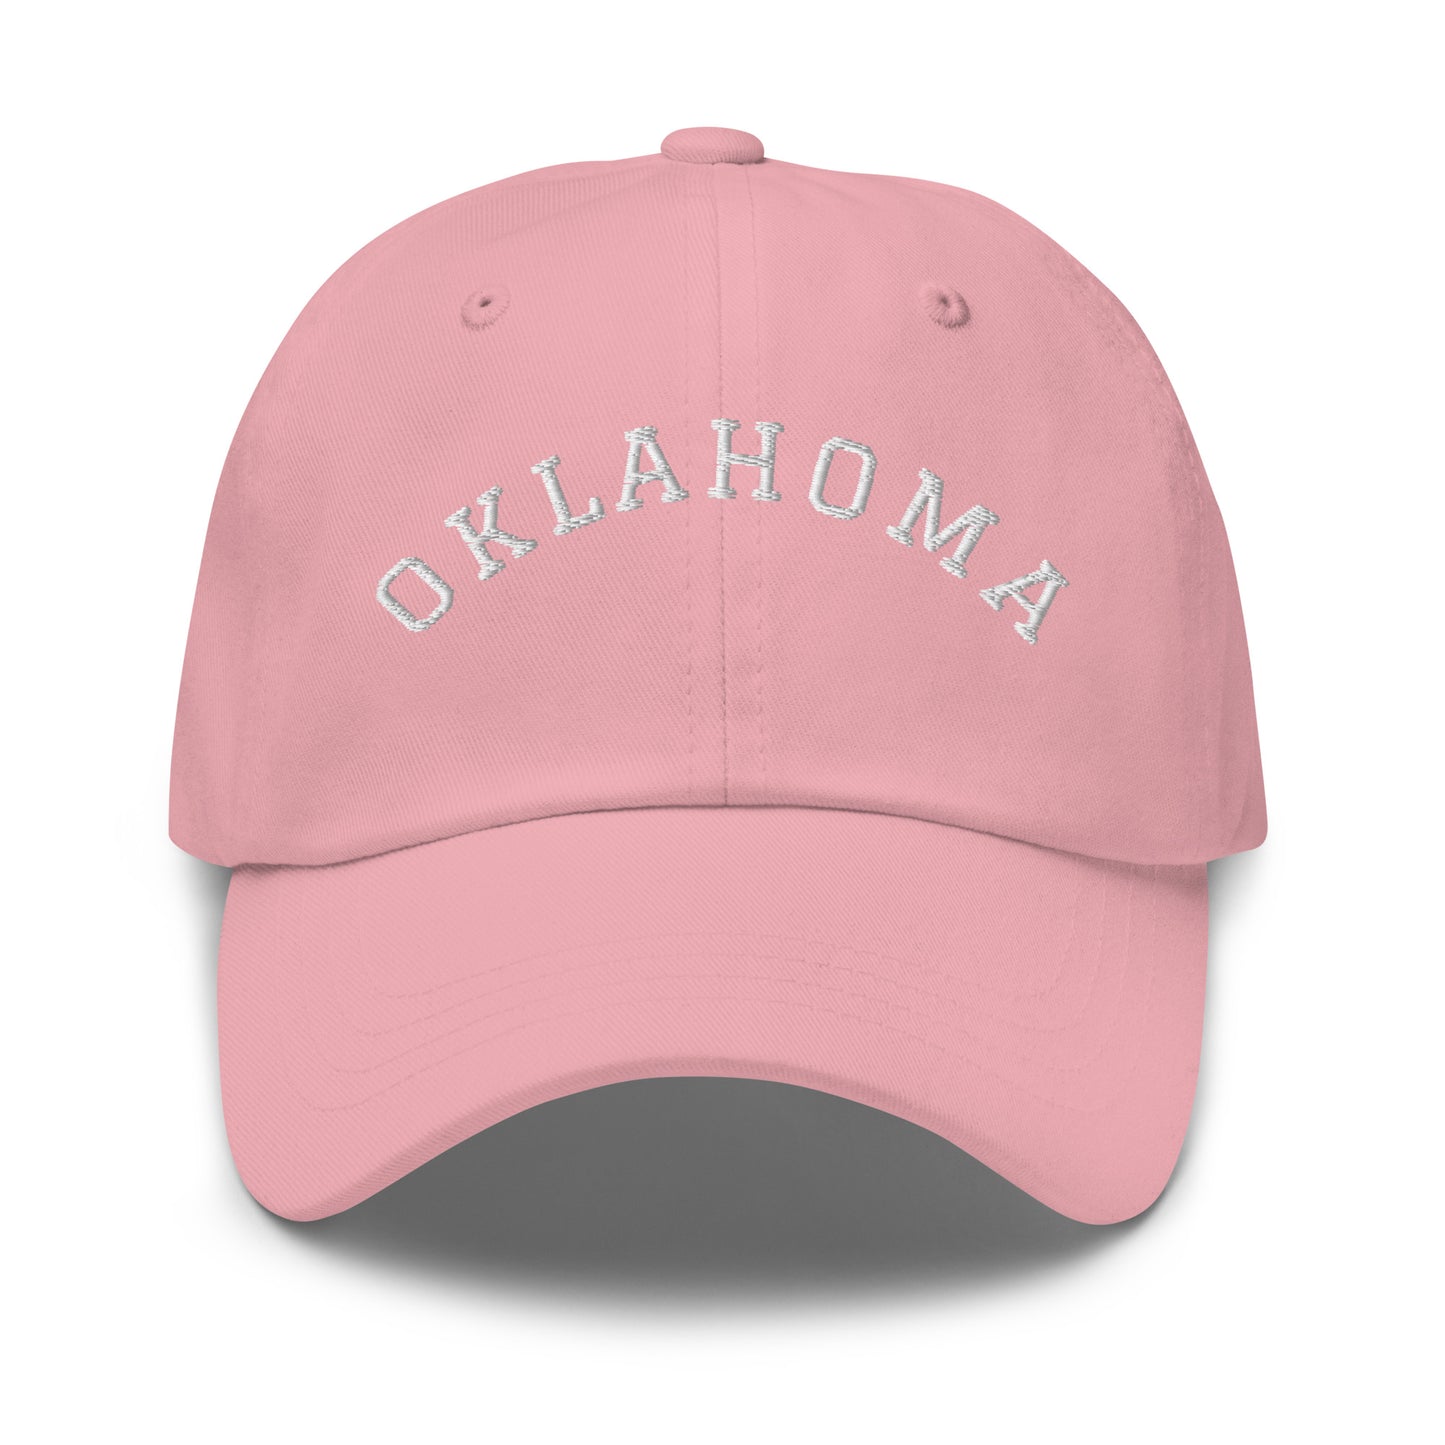 Oklahoma Arch Dad Hat